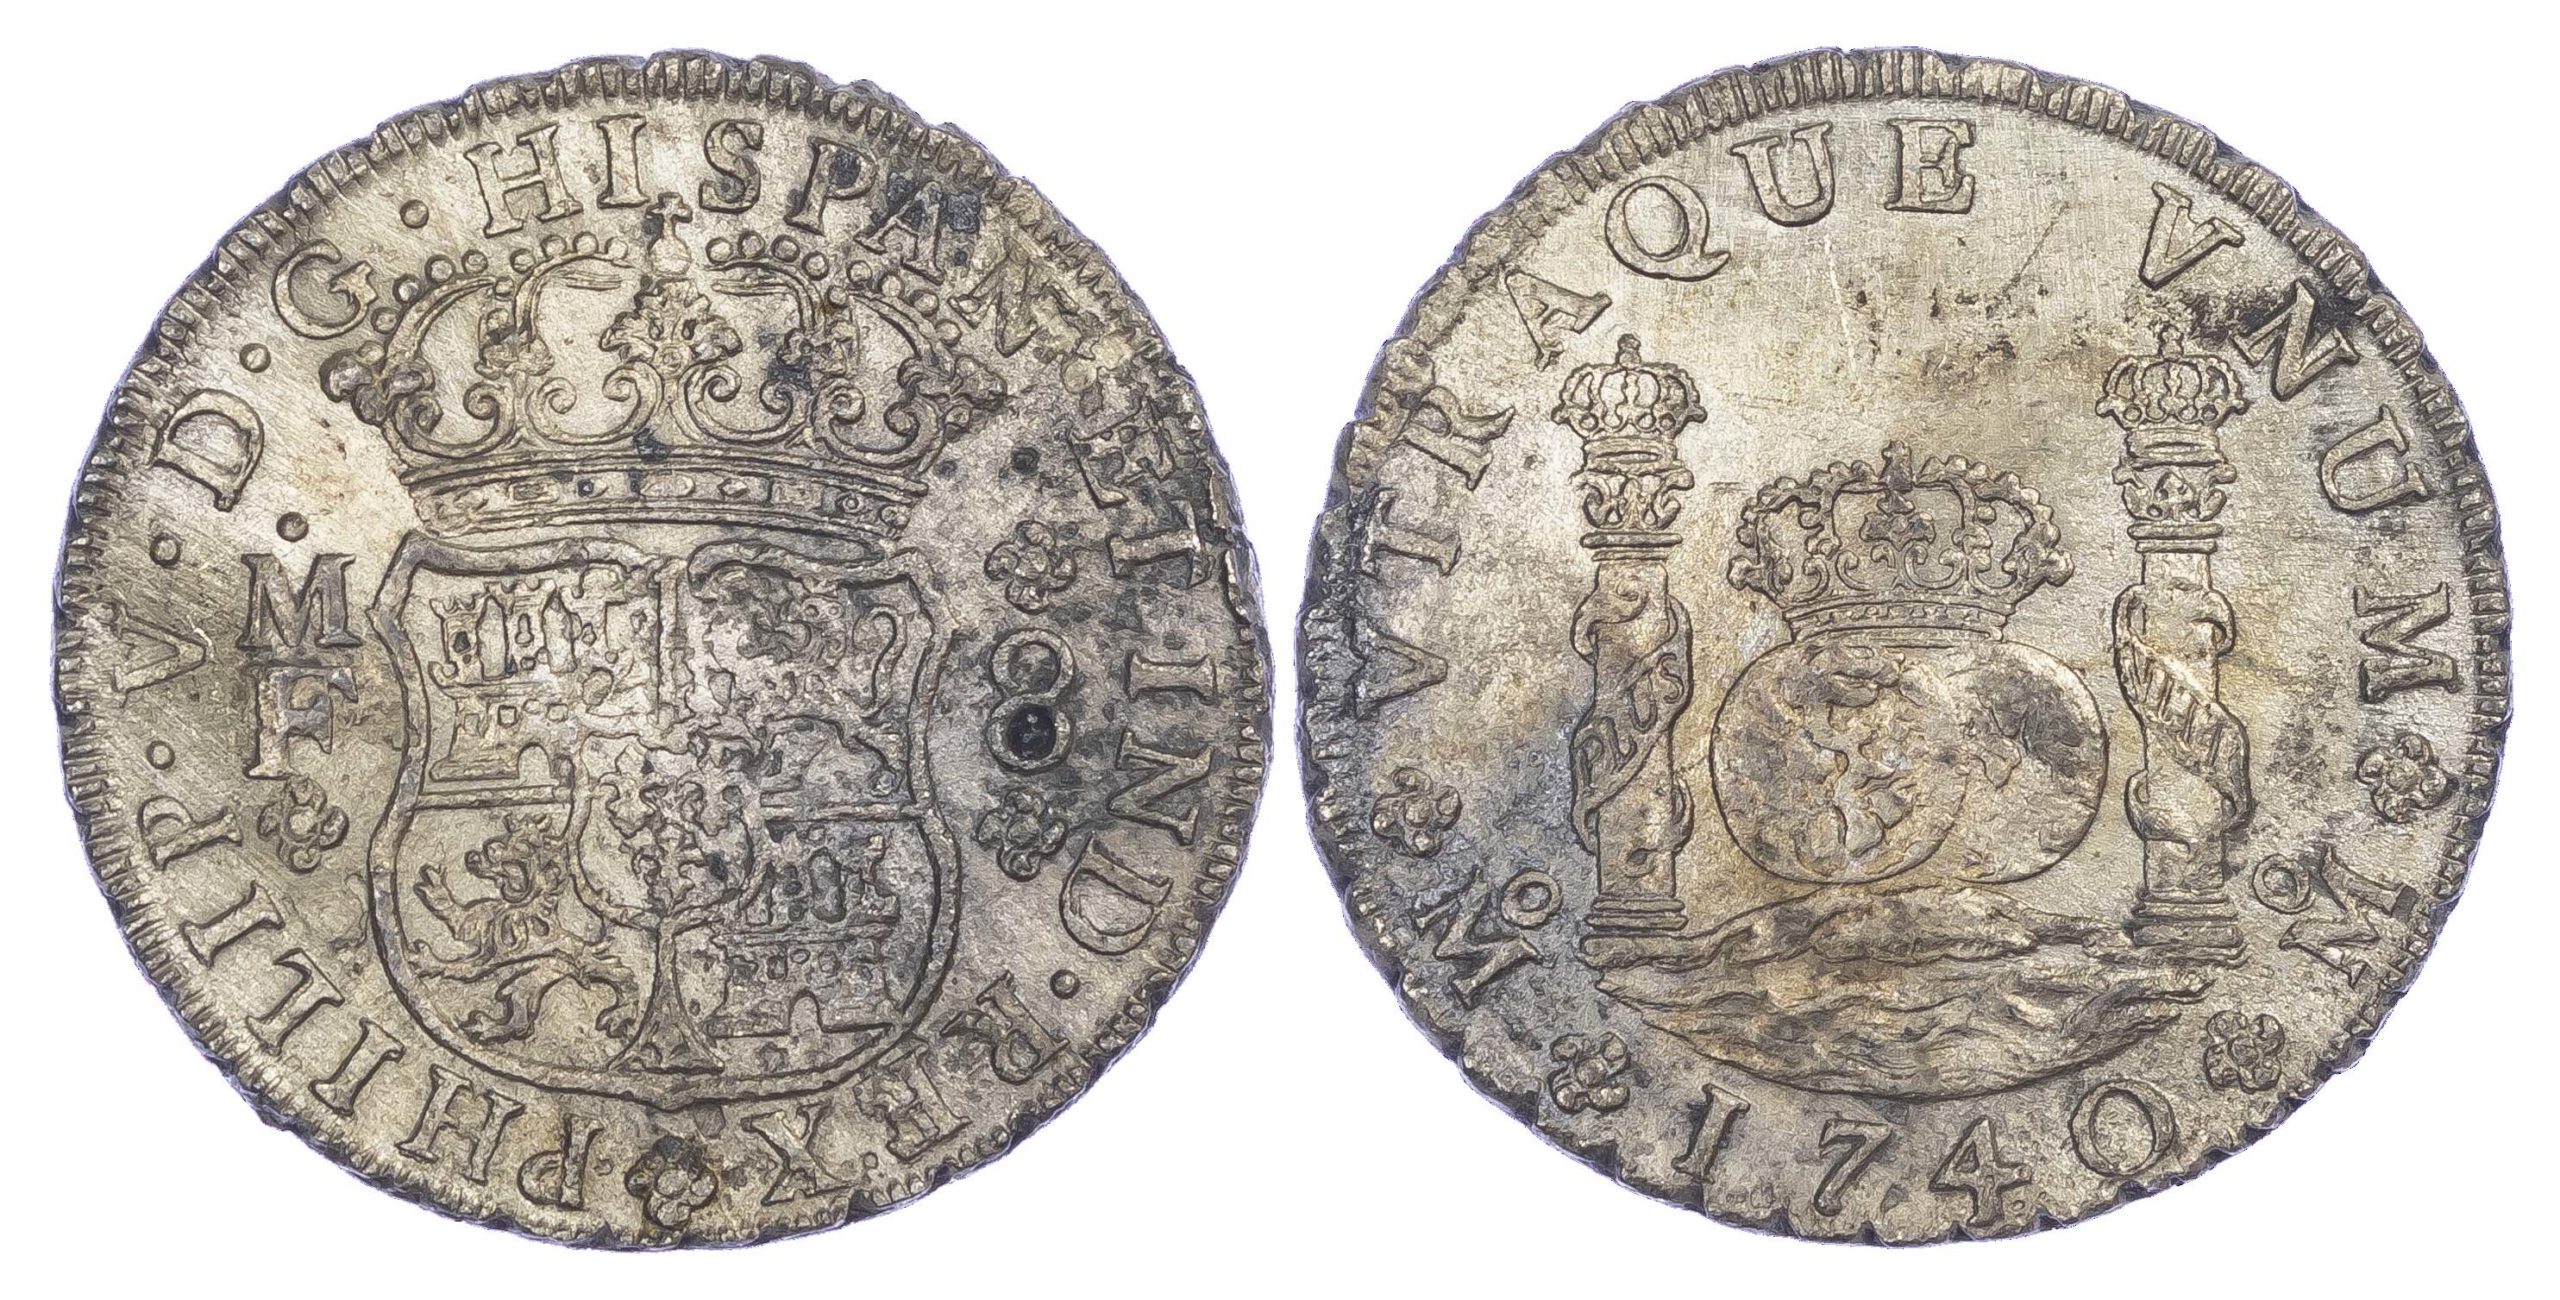 Mexico (colonial), Philip V (1700-1746), silver 8 Reales, 1740